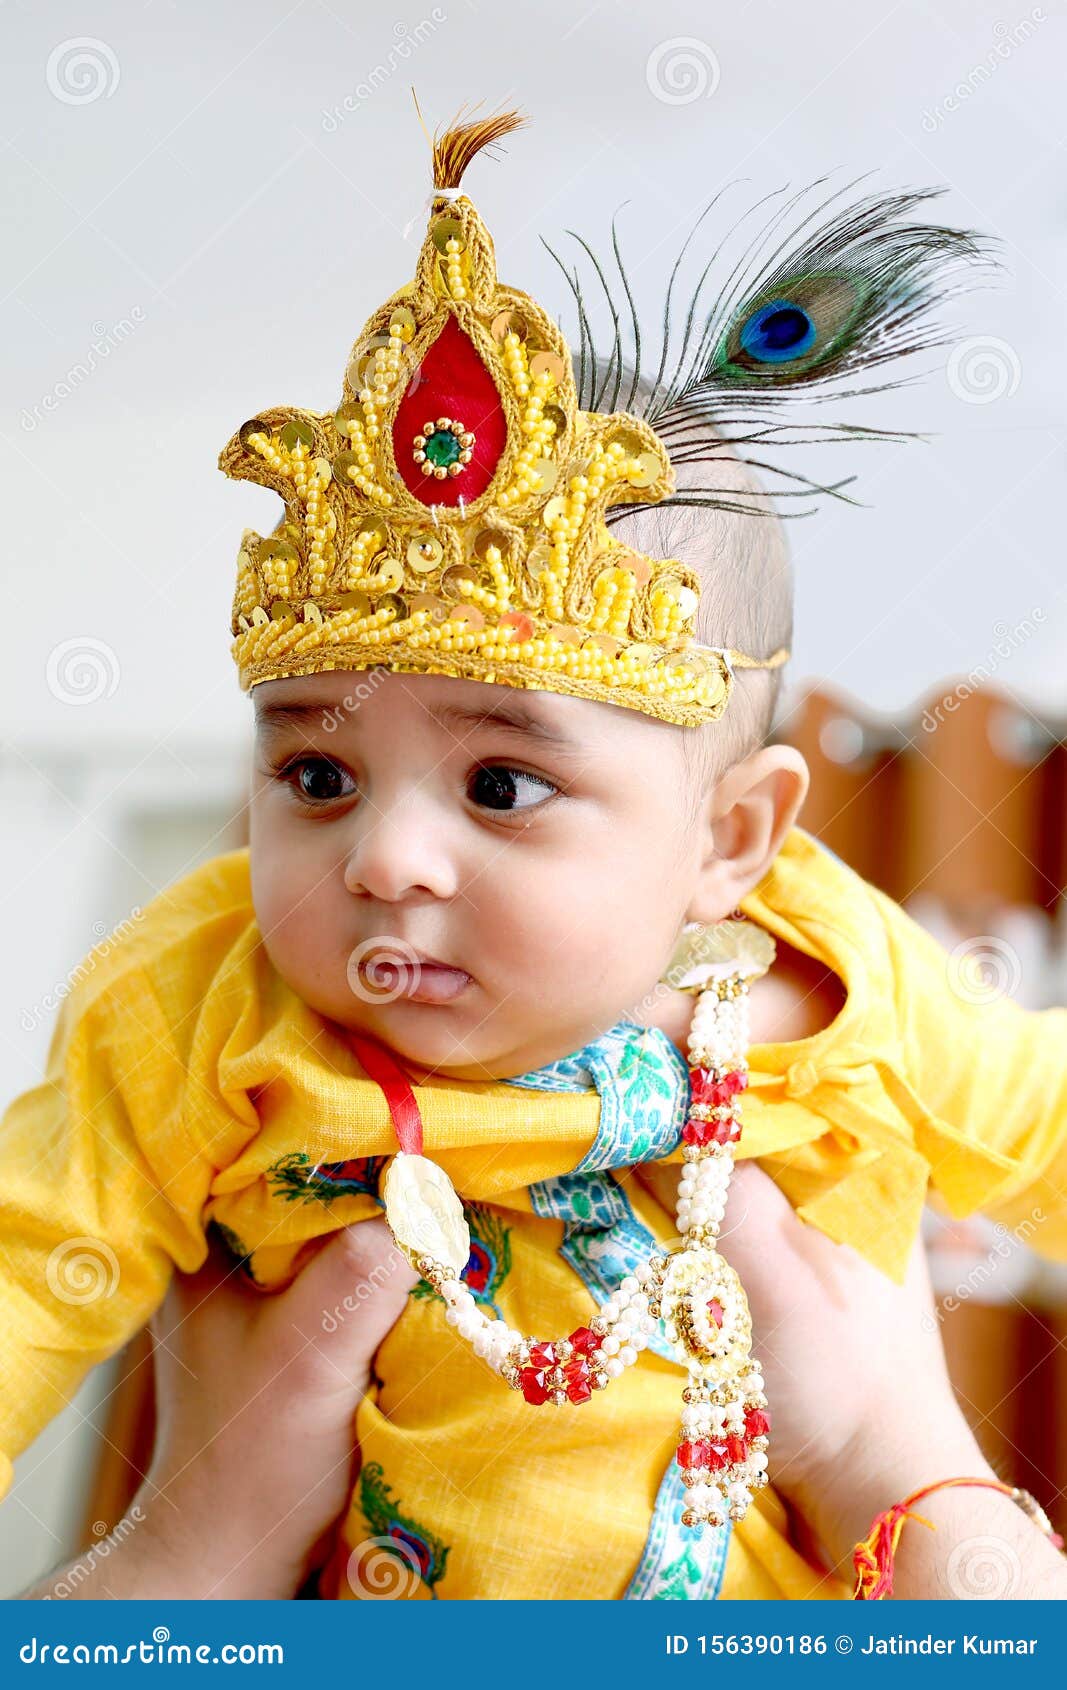 Picture of Baby krishna. stock photo. Image of birthday - 156390186